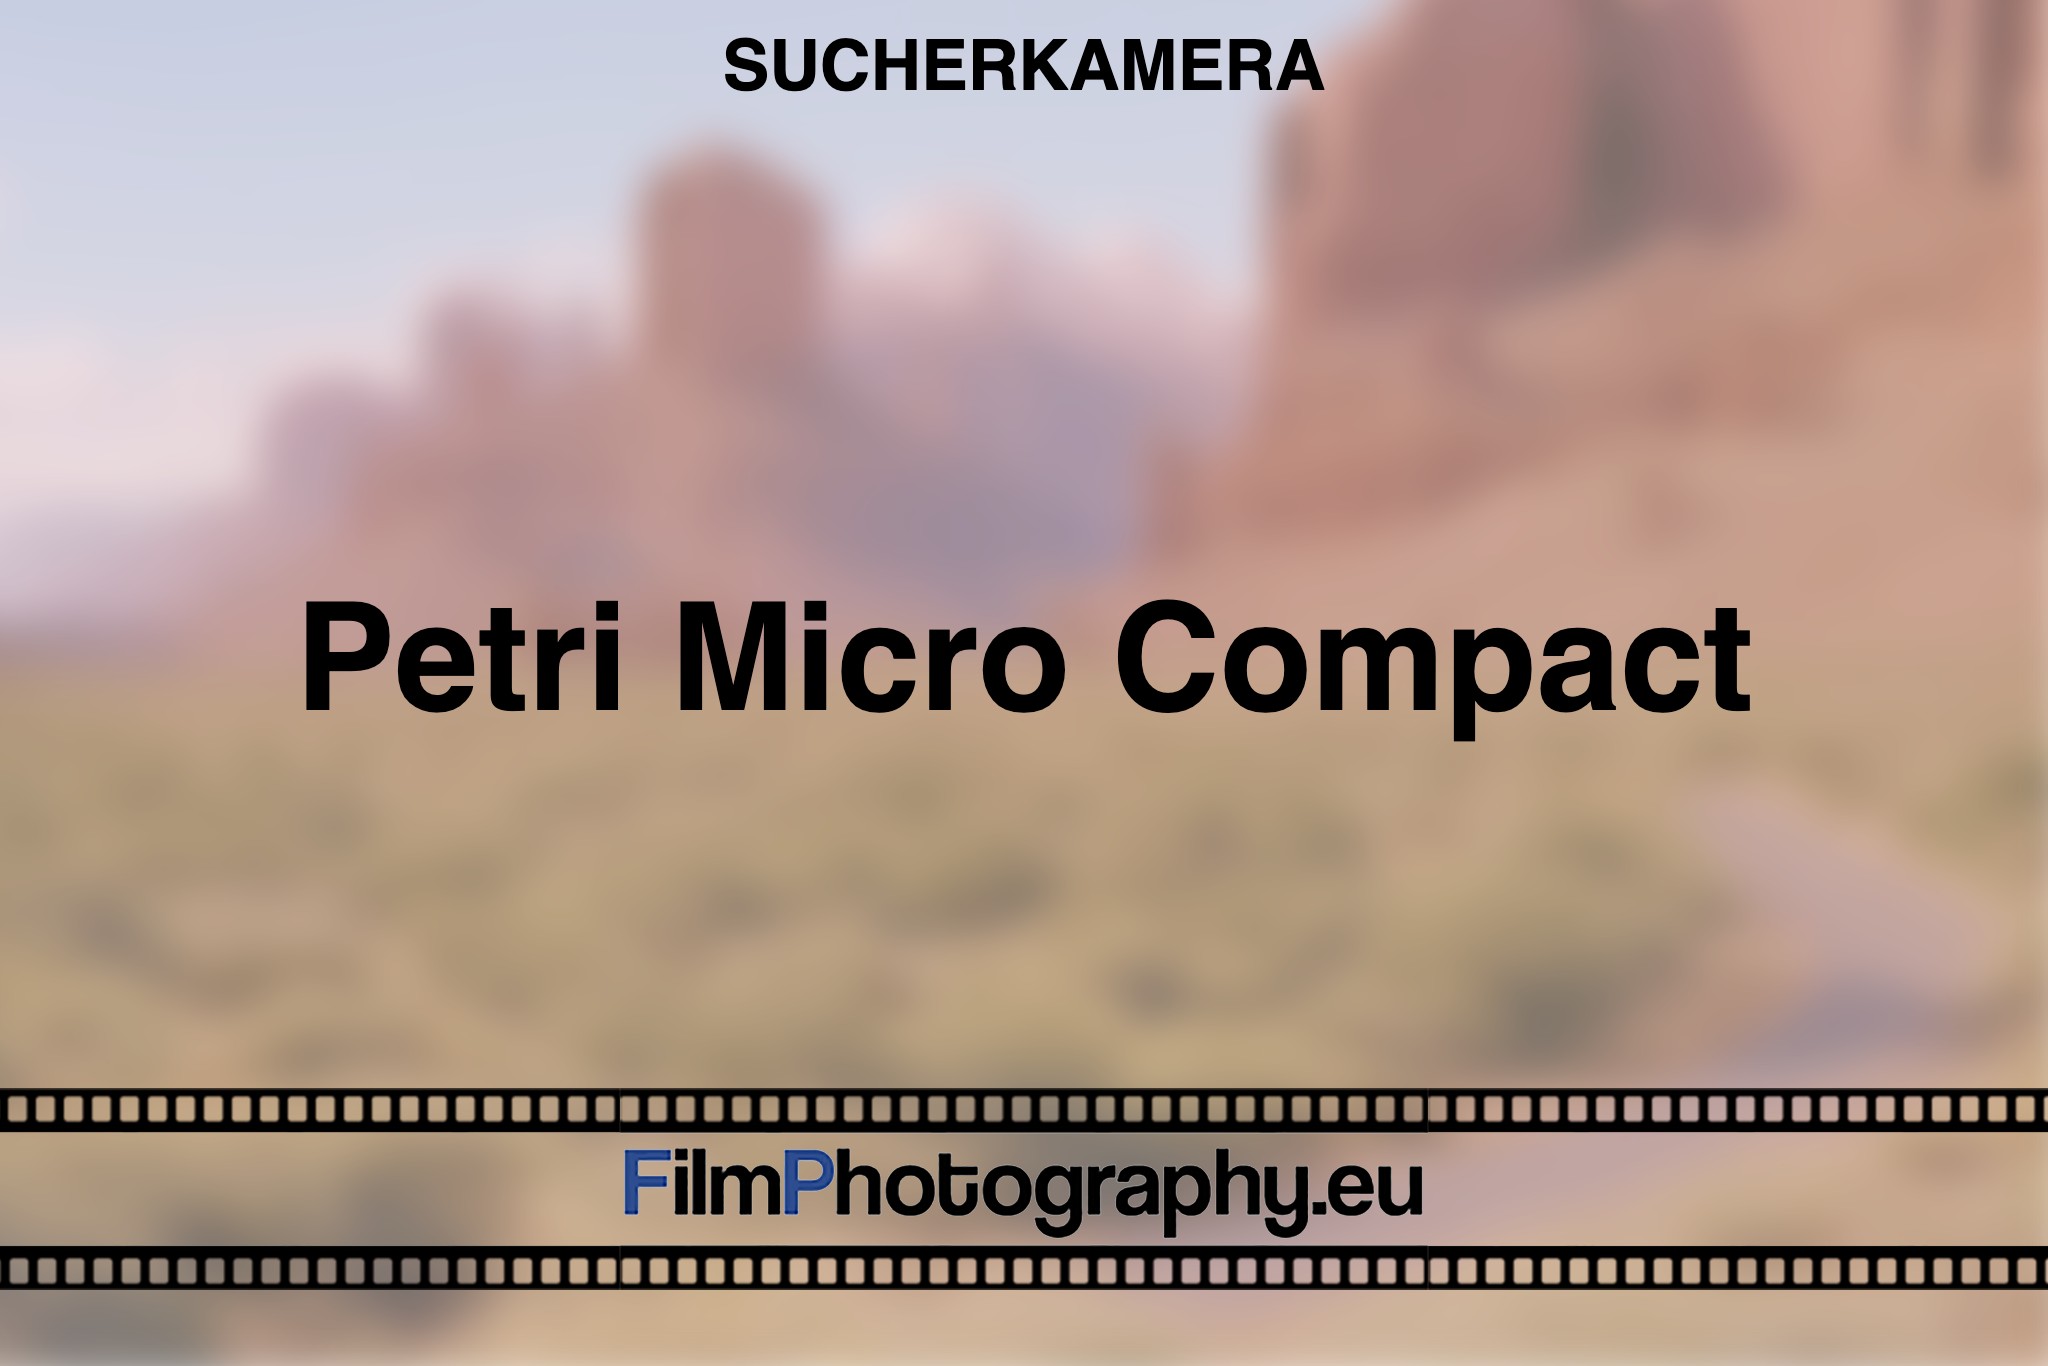 petri-micro-compact-sucherkamera-bnv